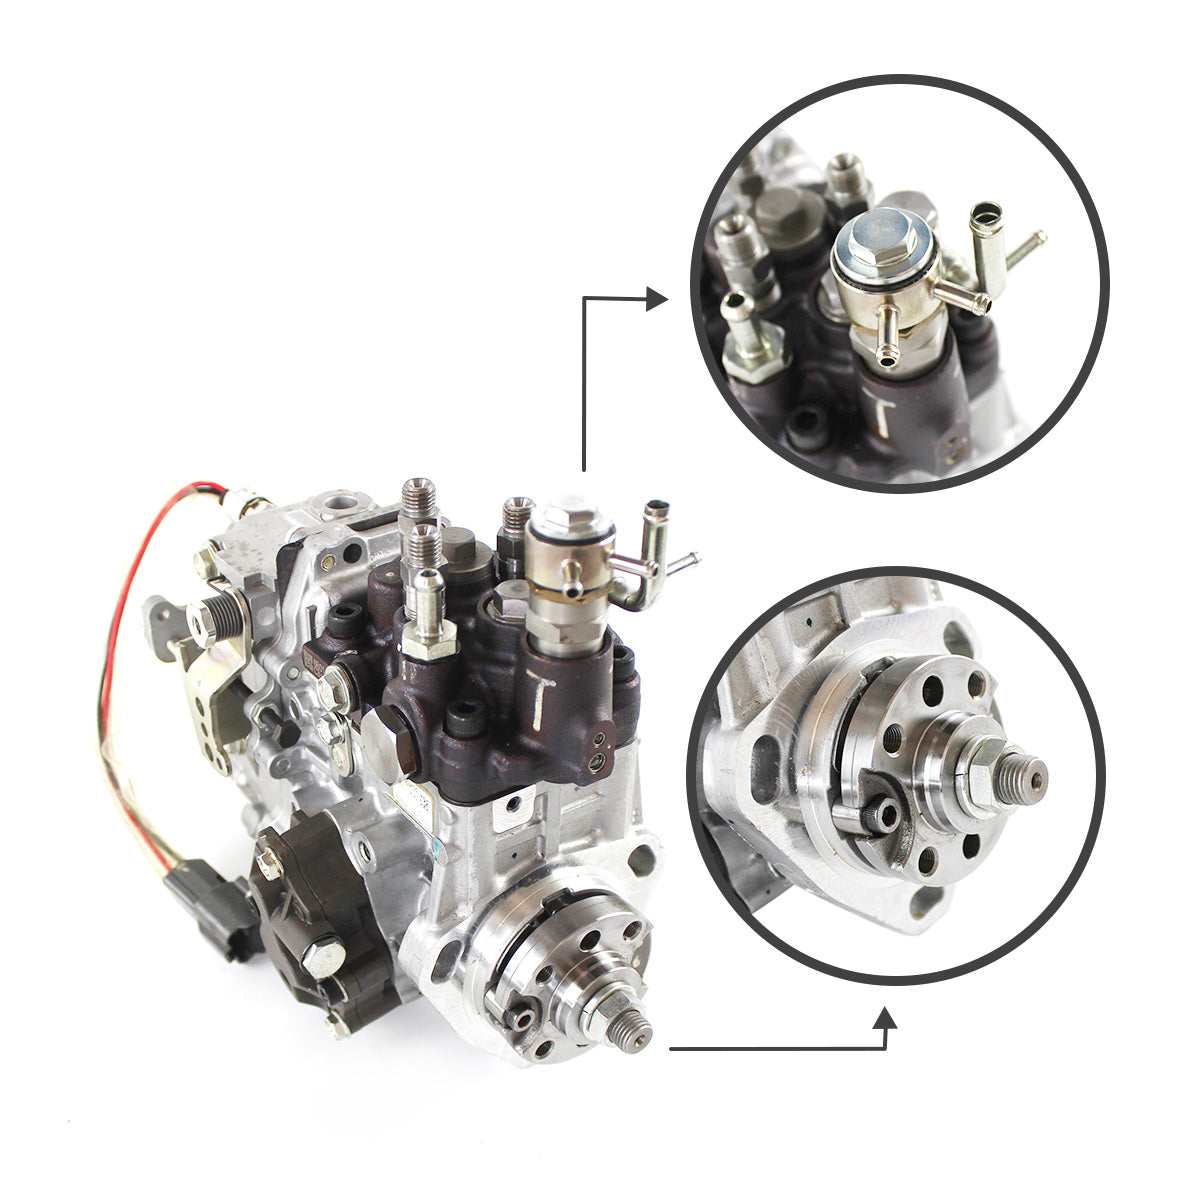 729236-51412 Diesel Fuel Injection Pump for Yanmar 3TNV88 Engine